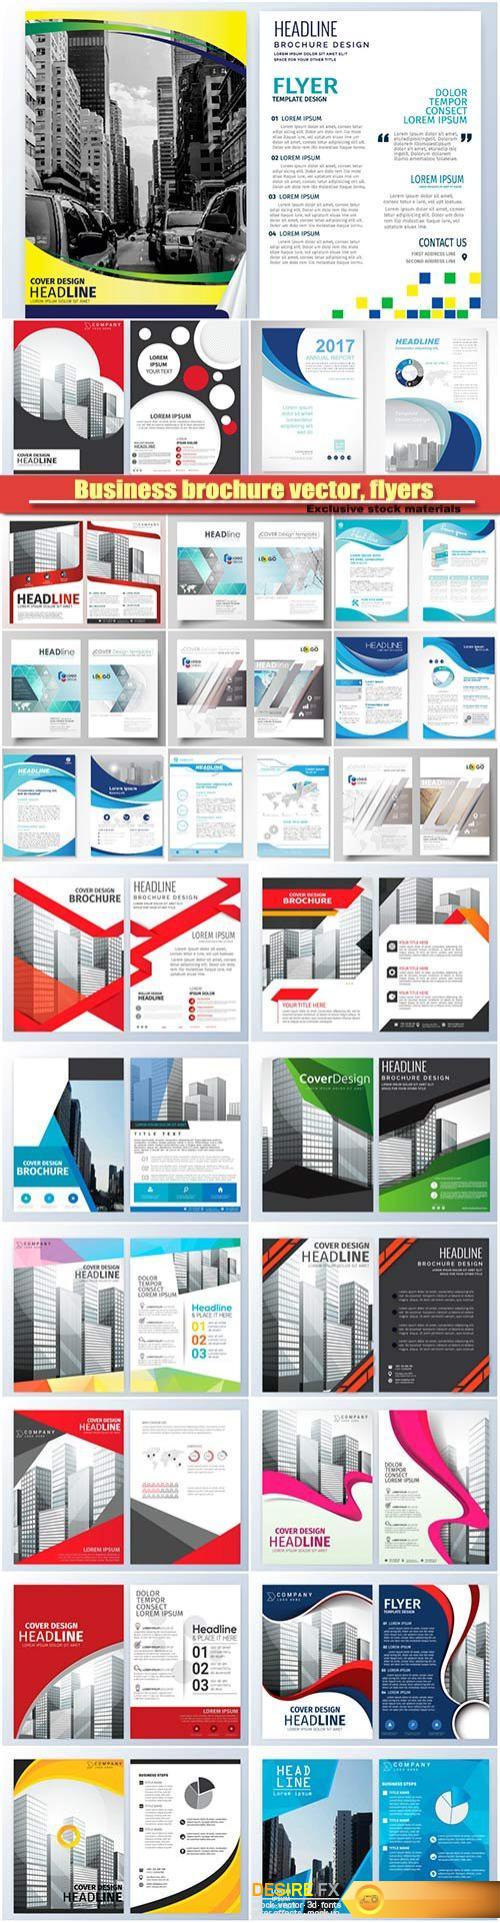 Business brochure vector, flyers templates #16